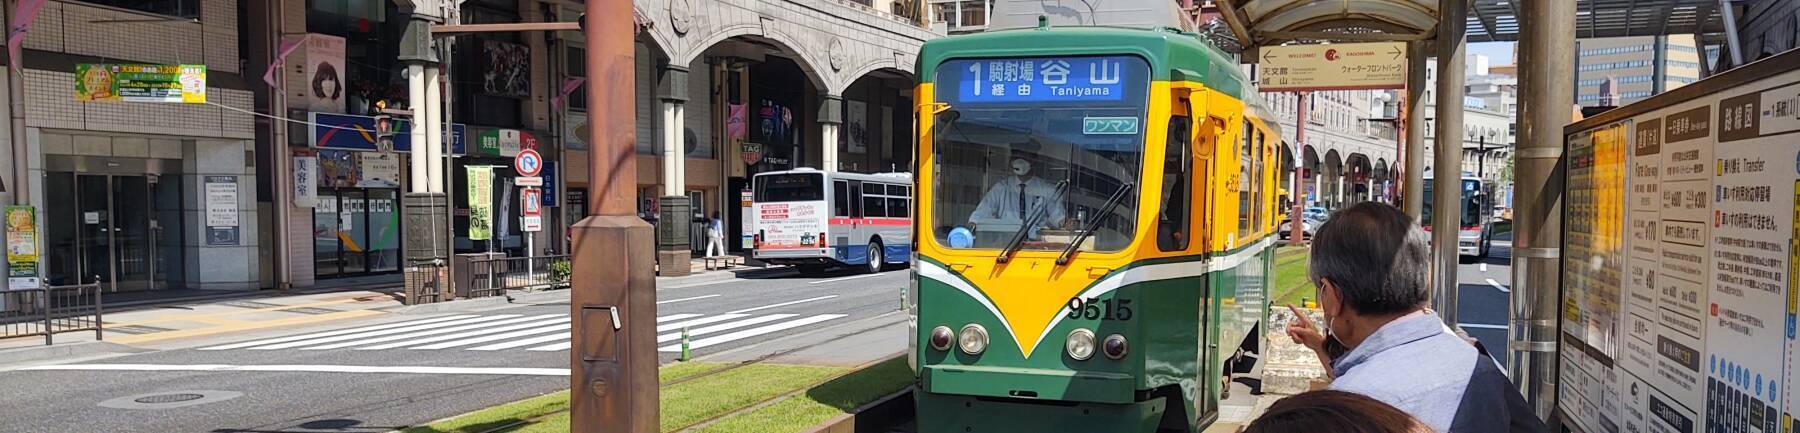 Tram #1 approaches the platform in Kagoshima's Tenmonkan shopping district.